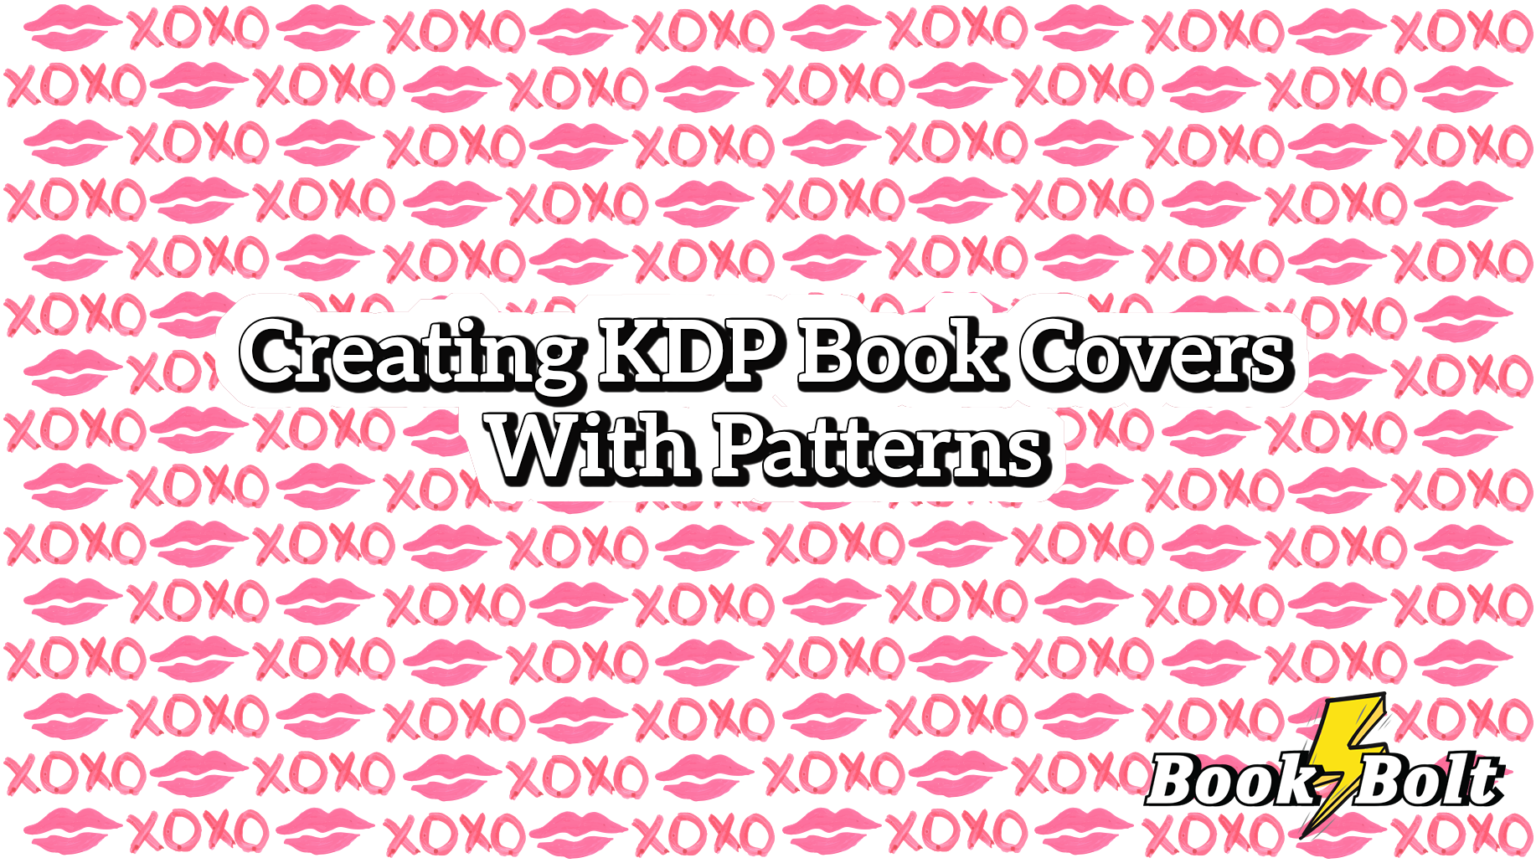 kdp book cover templates suck